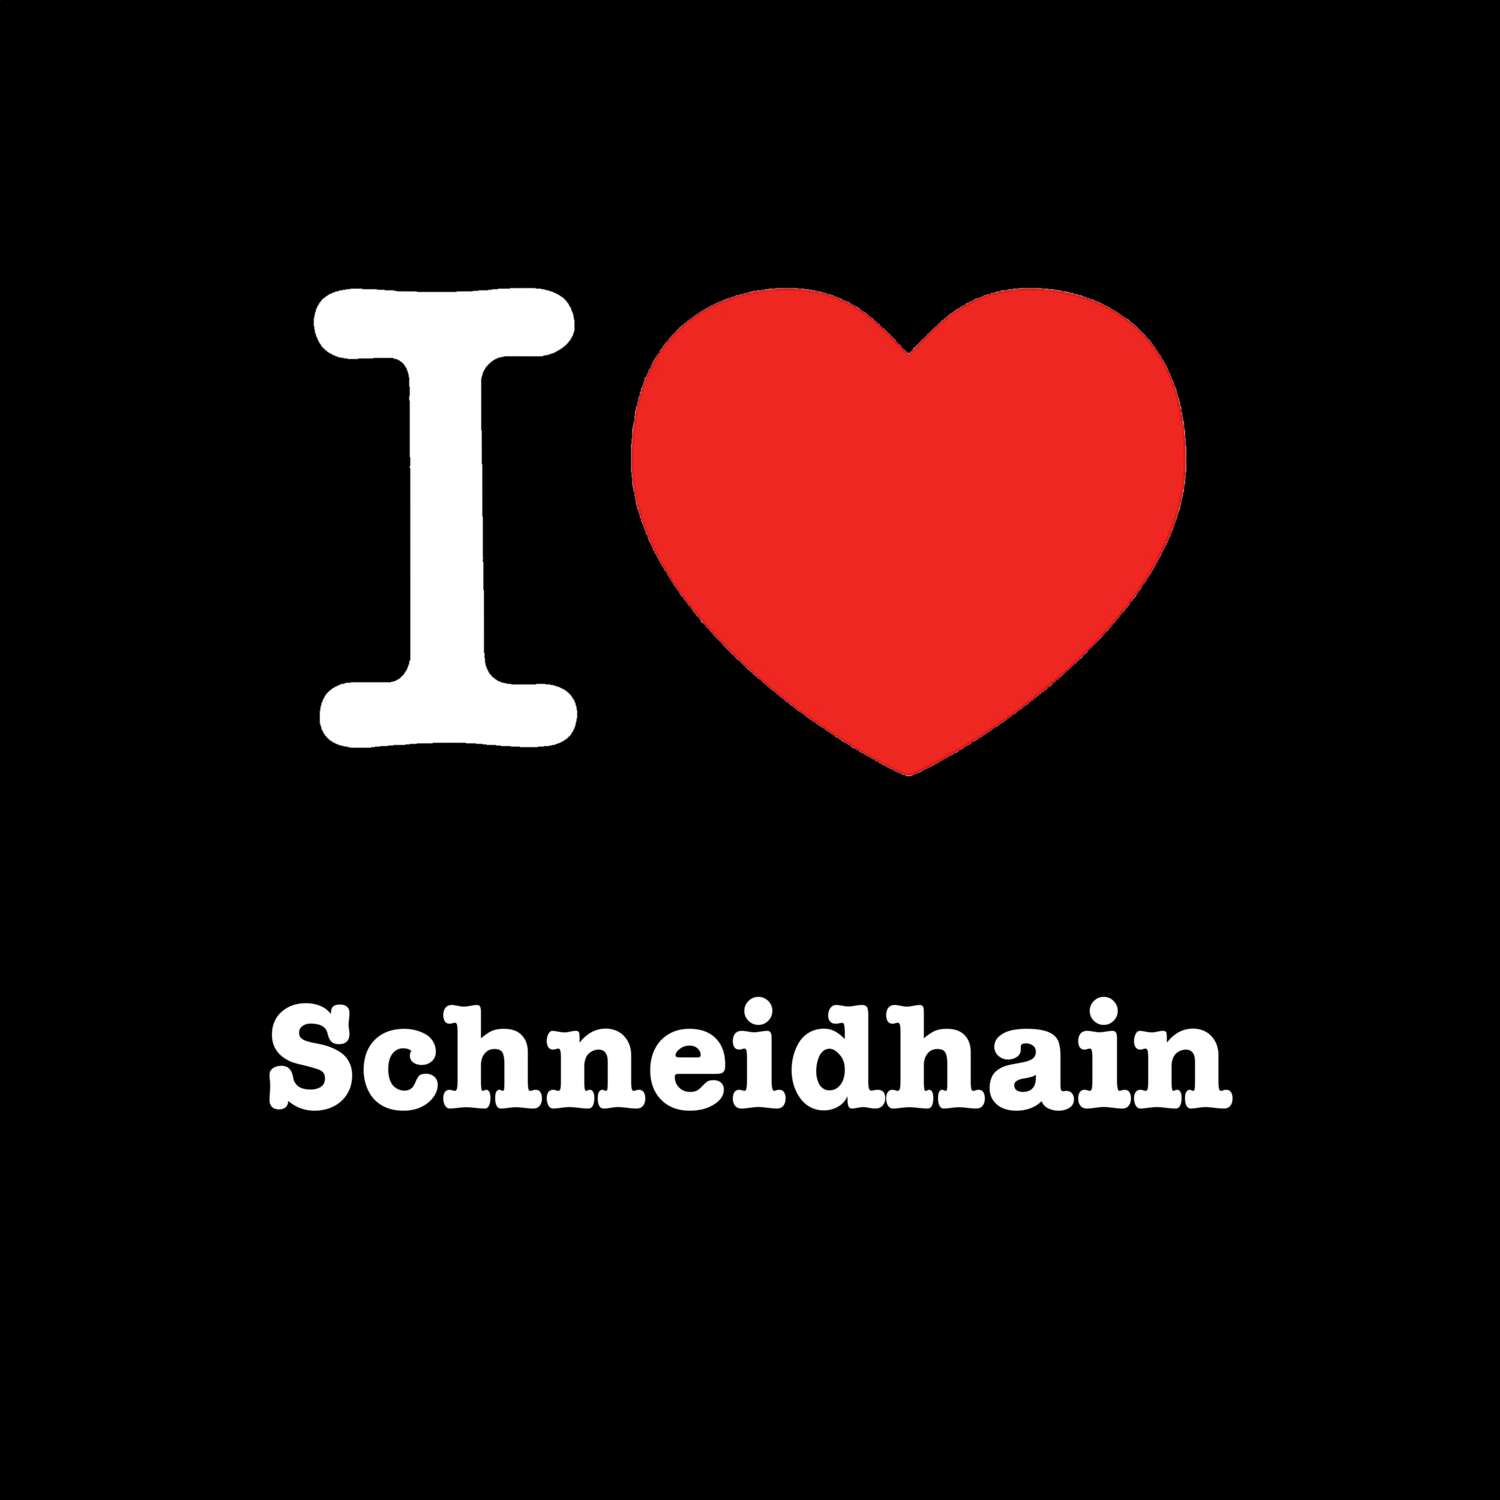 Schneidhain T-Shirt »I love«